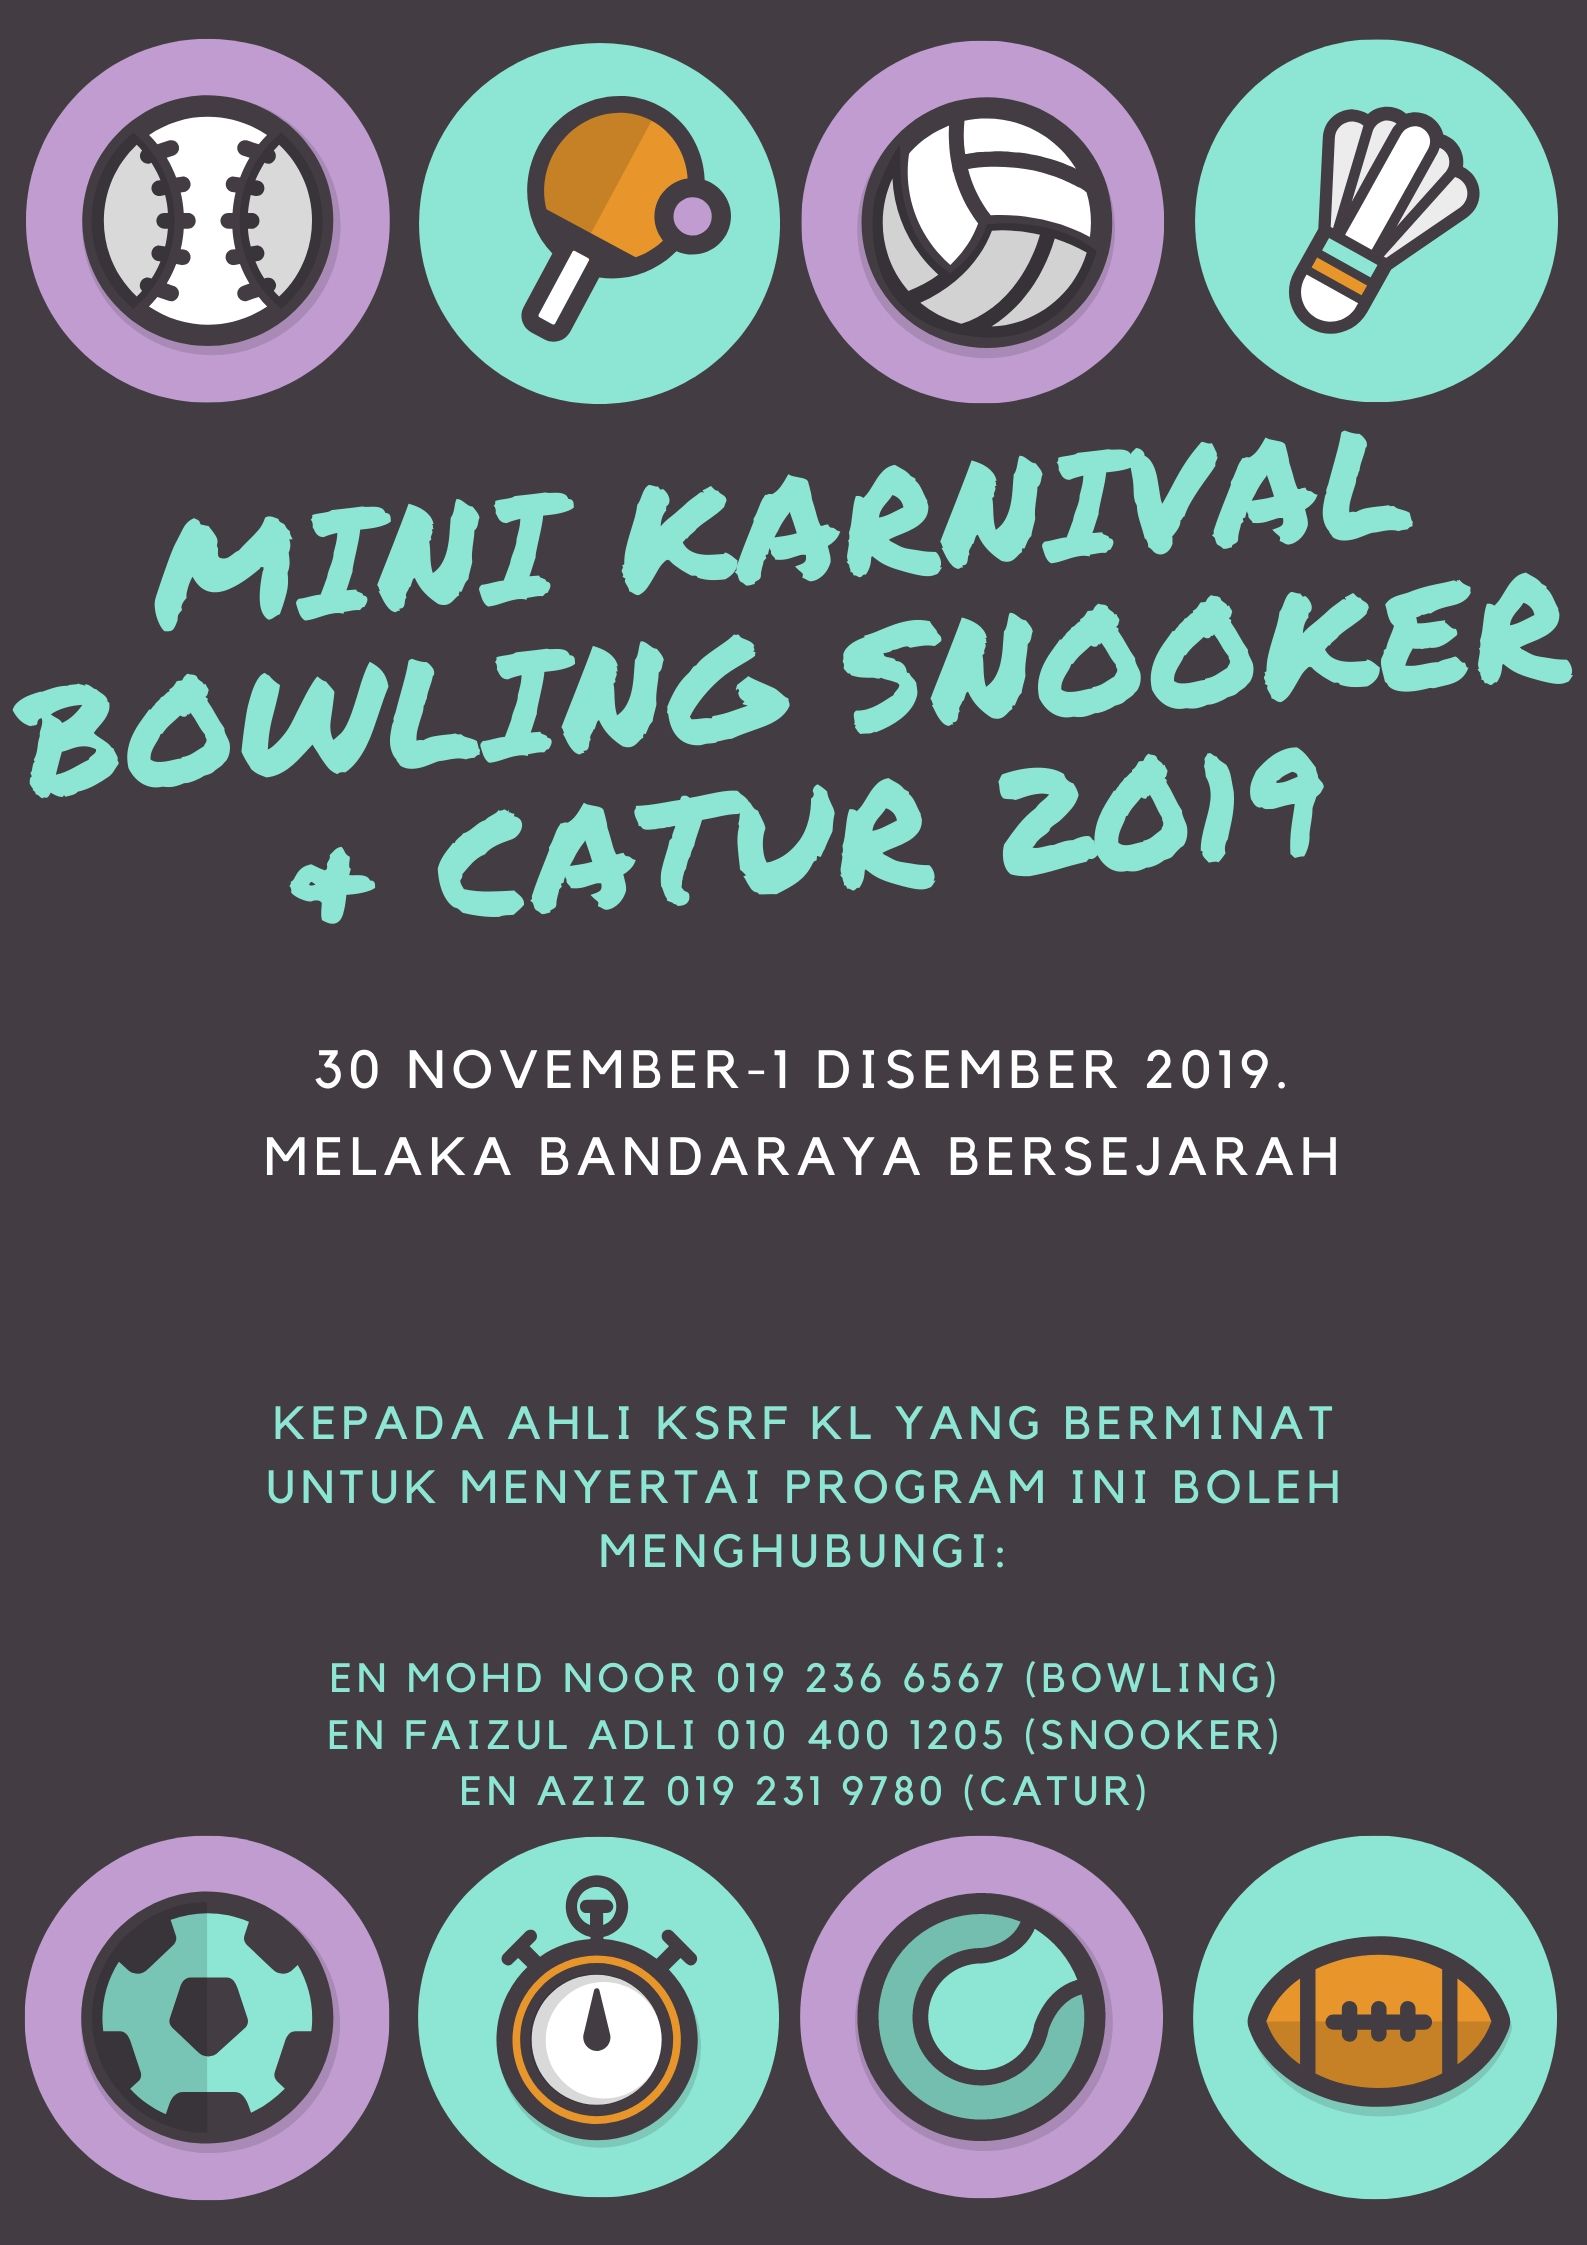 Mini Karnival Indoor Game Bowling Snooker Catur 2019